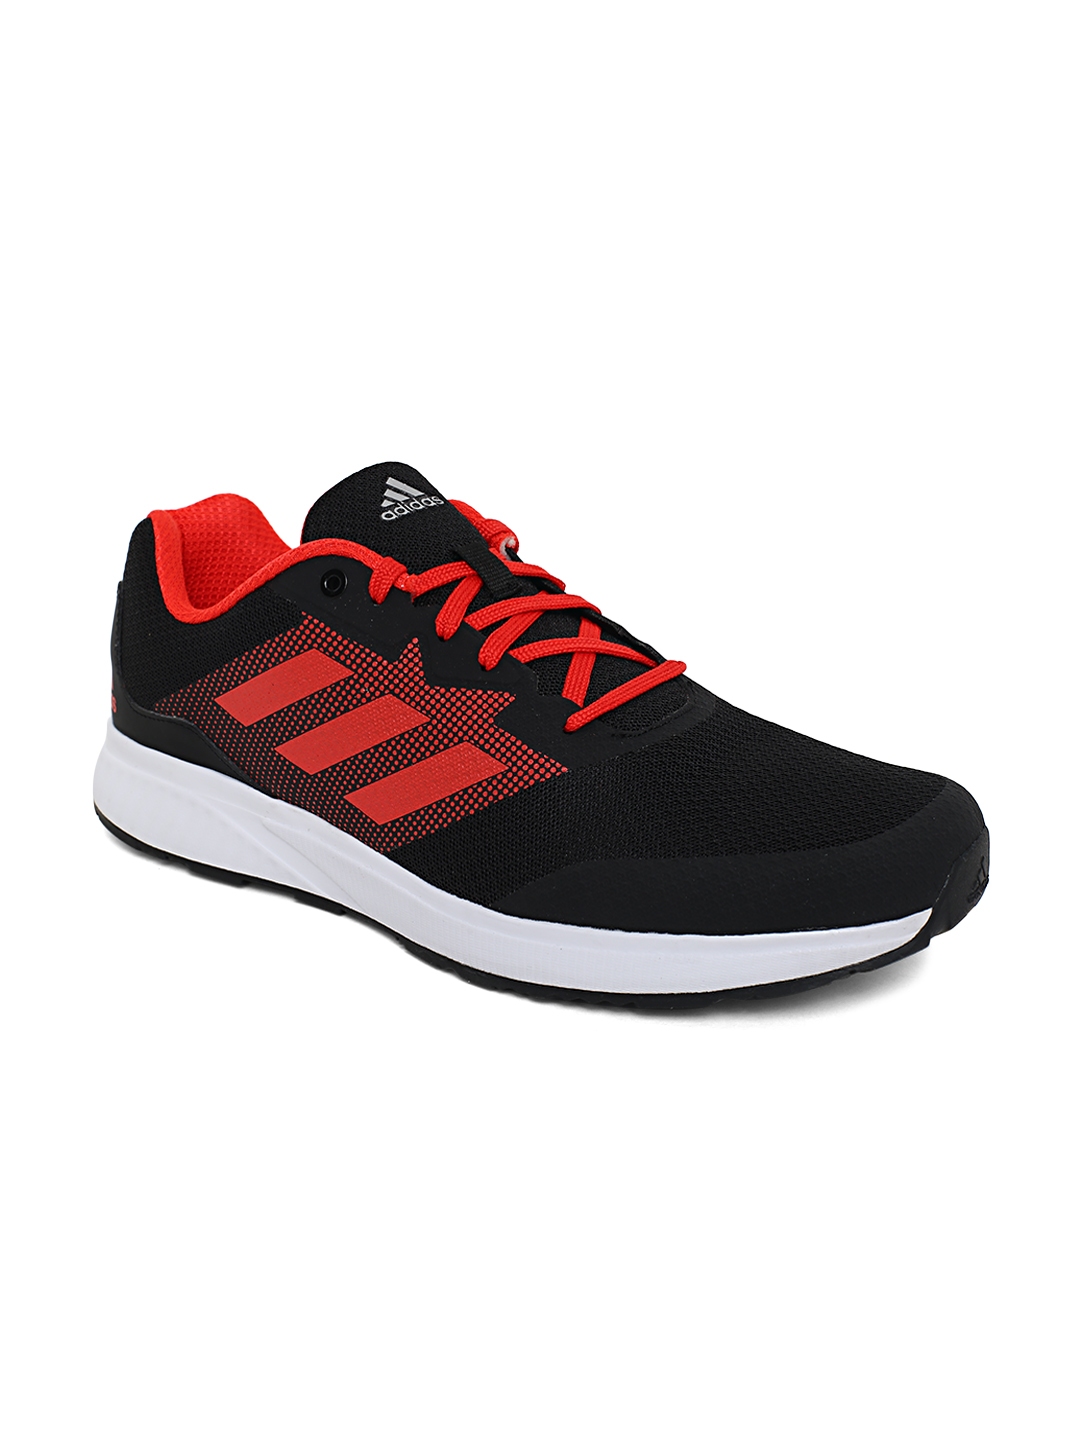 adidas safiro running shoes